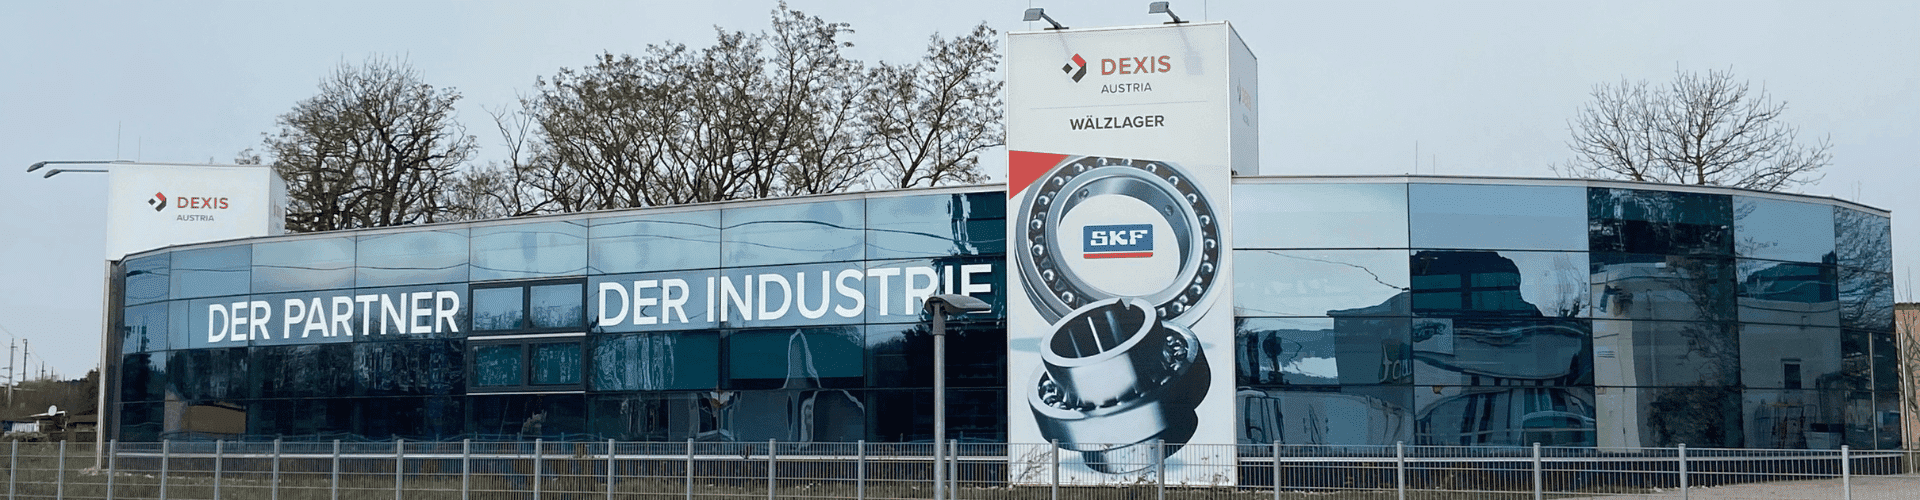 DEXIS Austria Stockerau | großes Sortiment, Top-Beratung